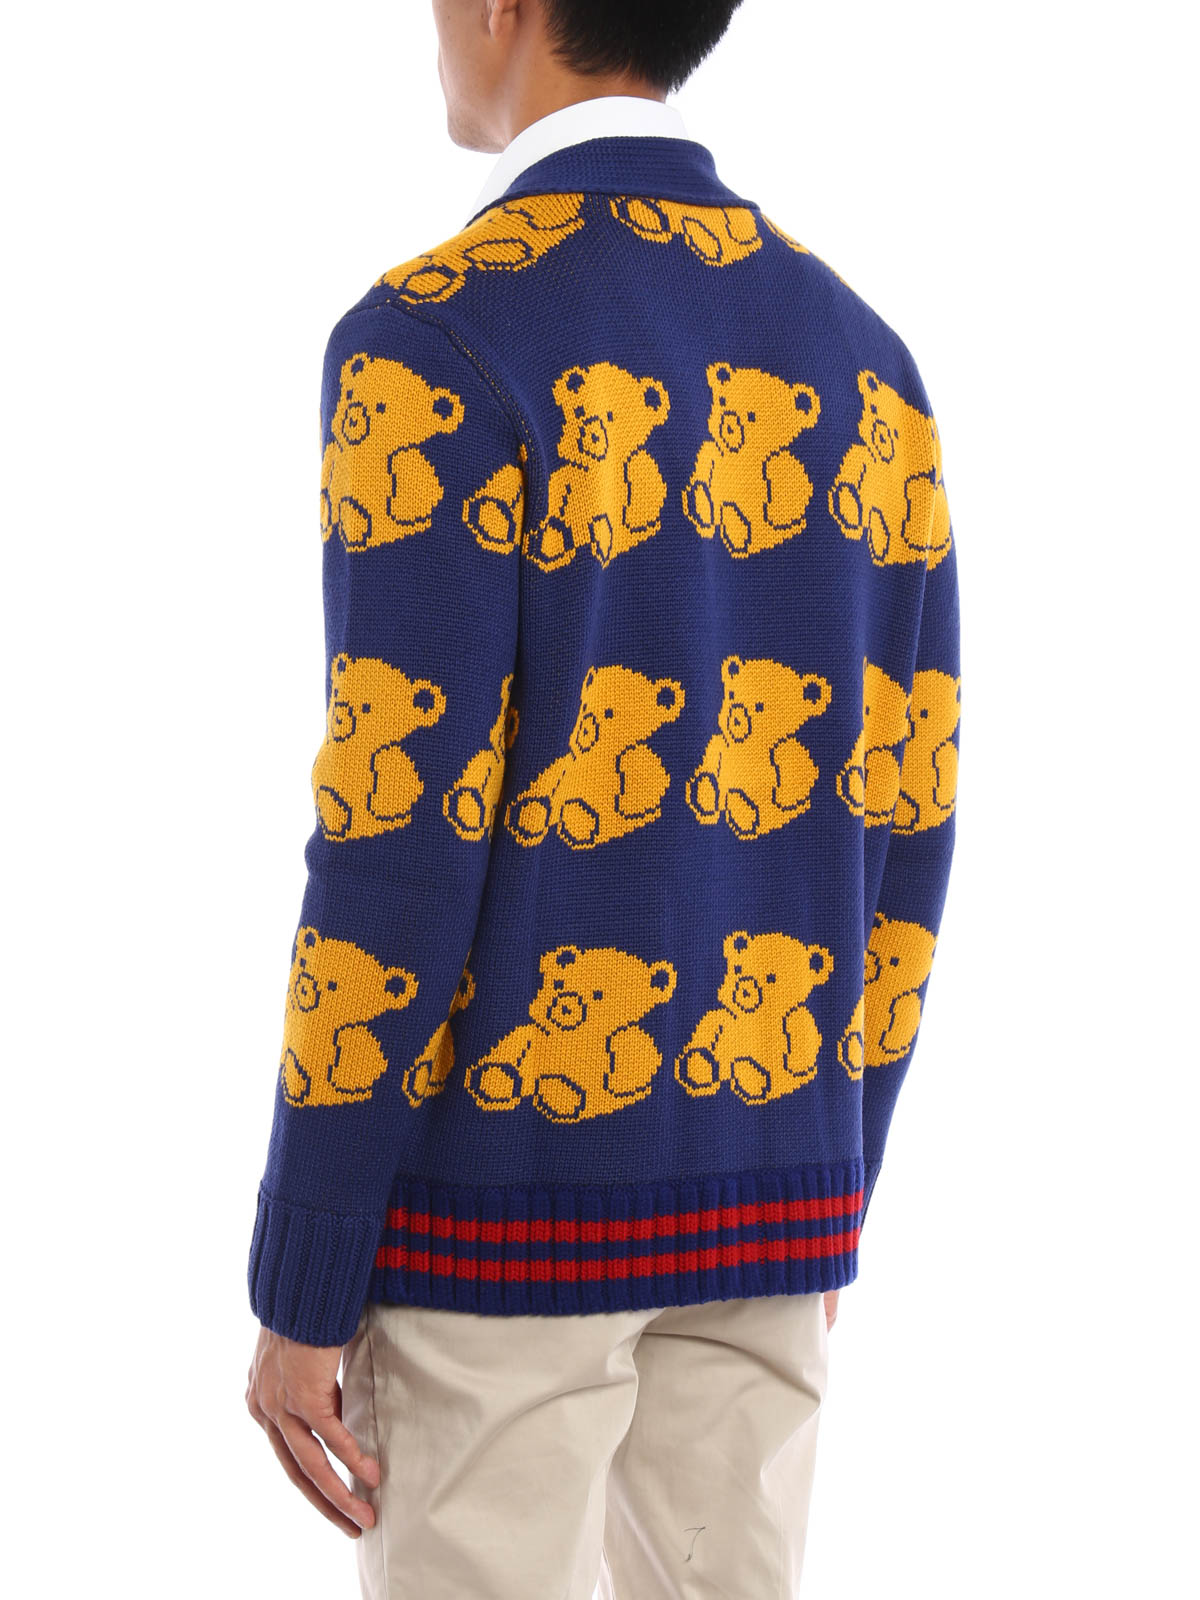 Gucci Gummy Bear Sweater | vlr.eng.br